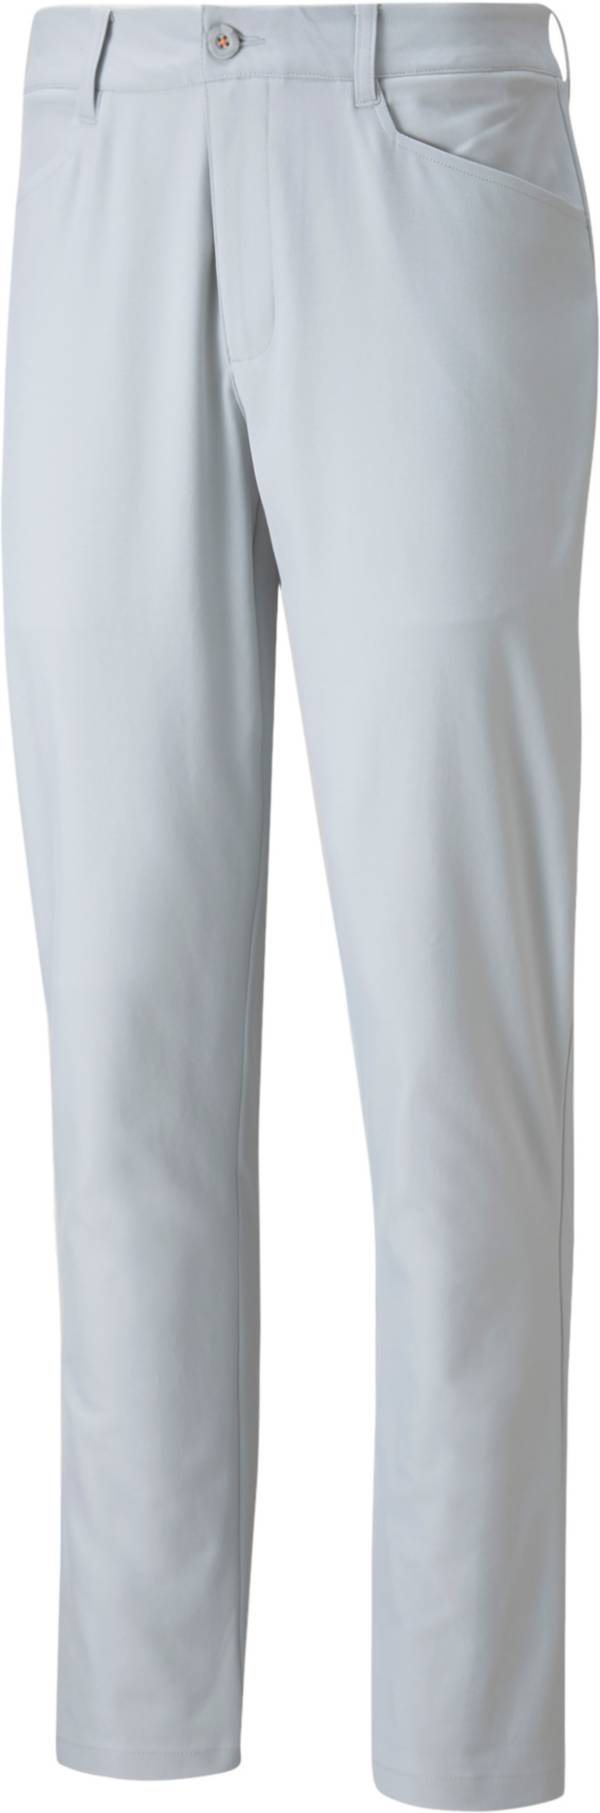 Puma Men's X Golf Pants product image